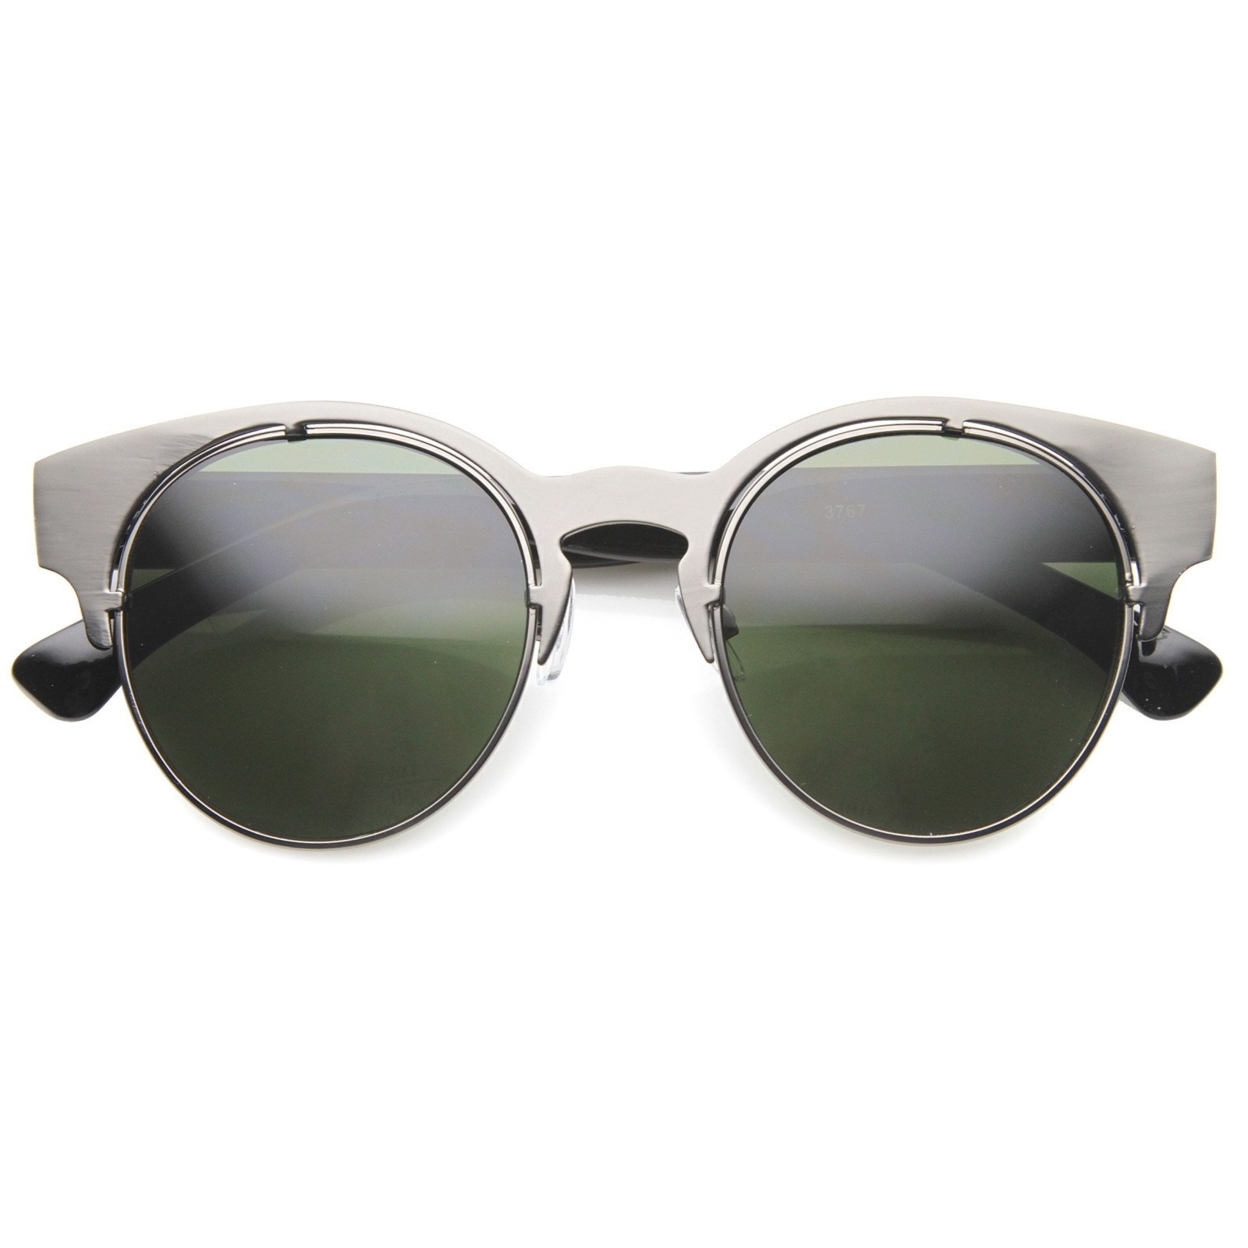 Mens Metal Semi-Rimless Sunglasses With UV400 Protected Composite Lens - Black / Smoke